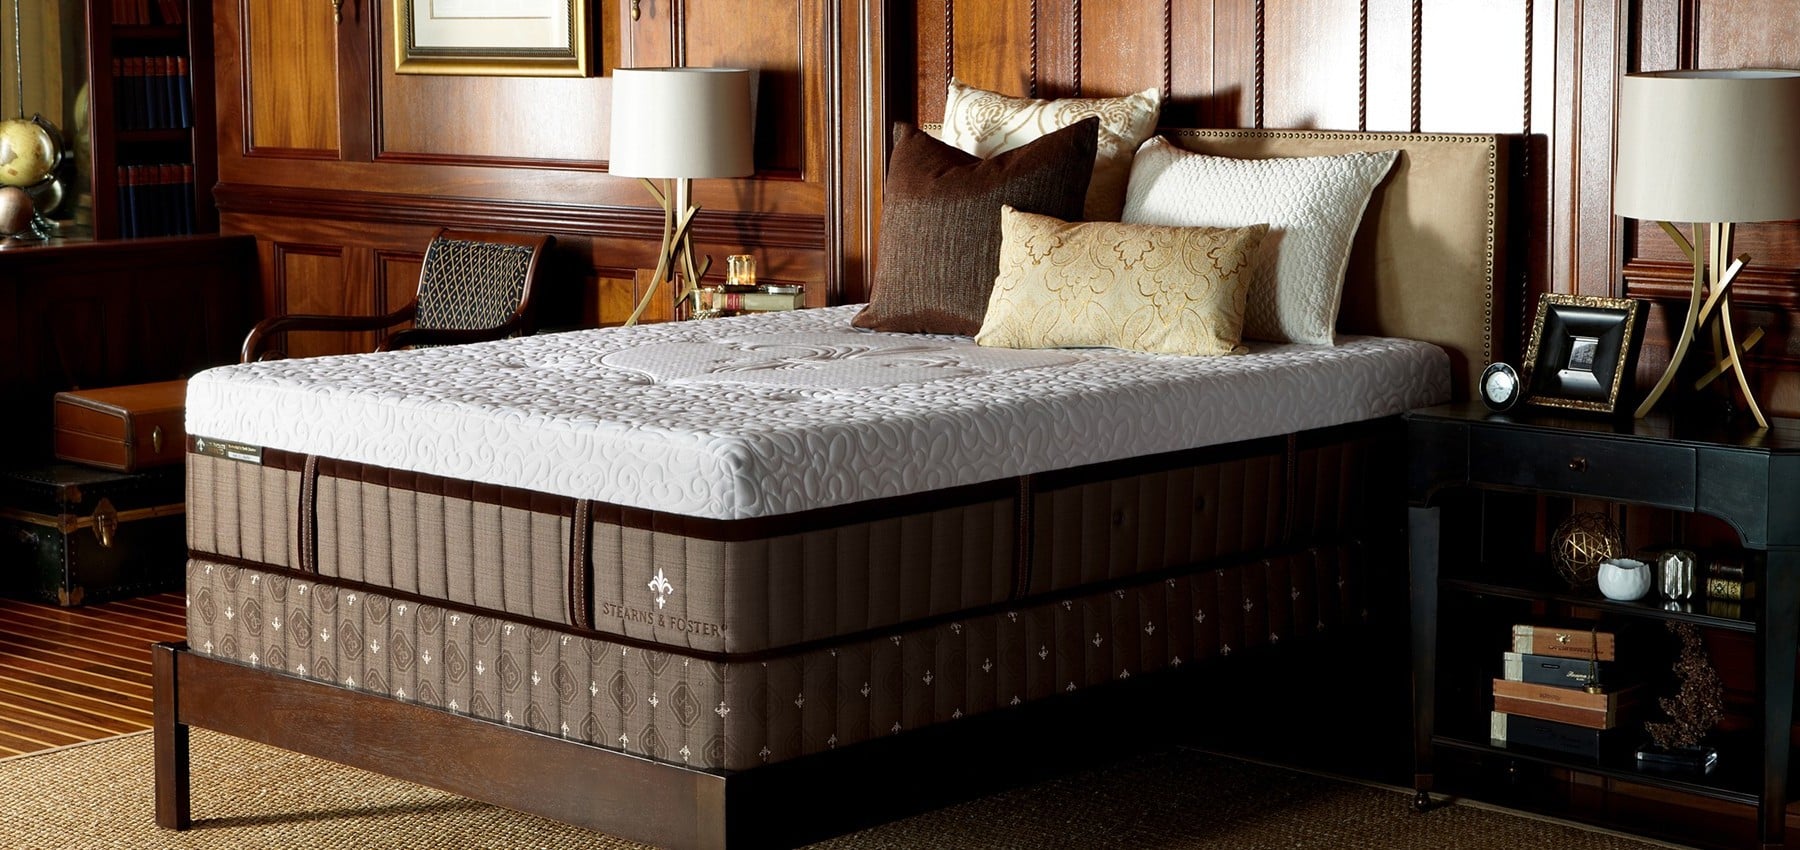 northwest bedding latex mattress reviews